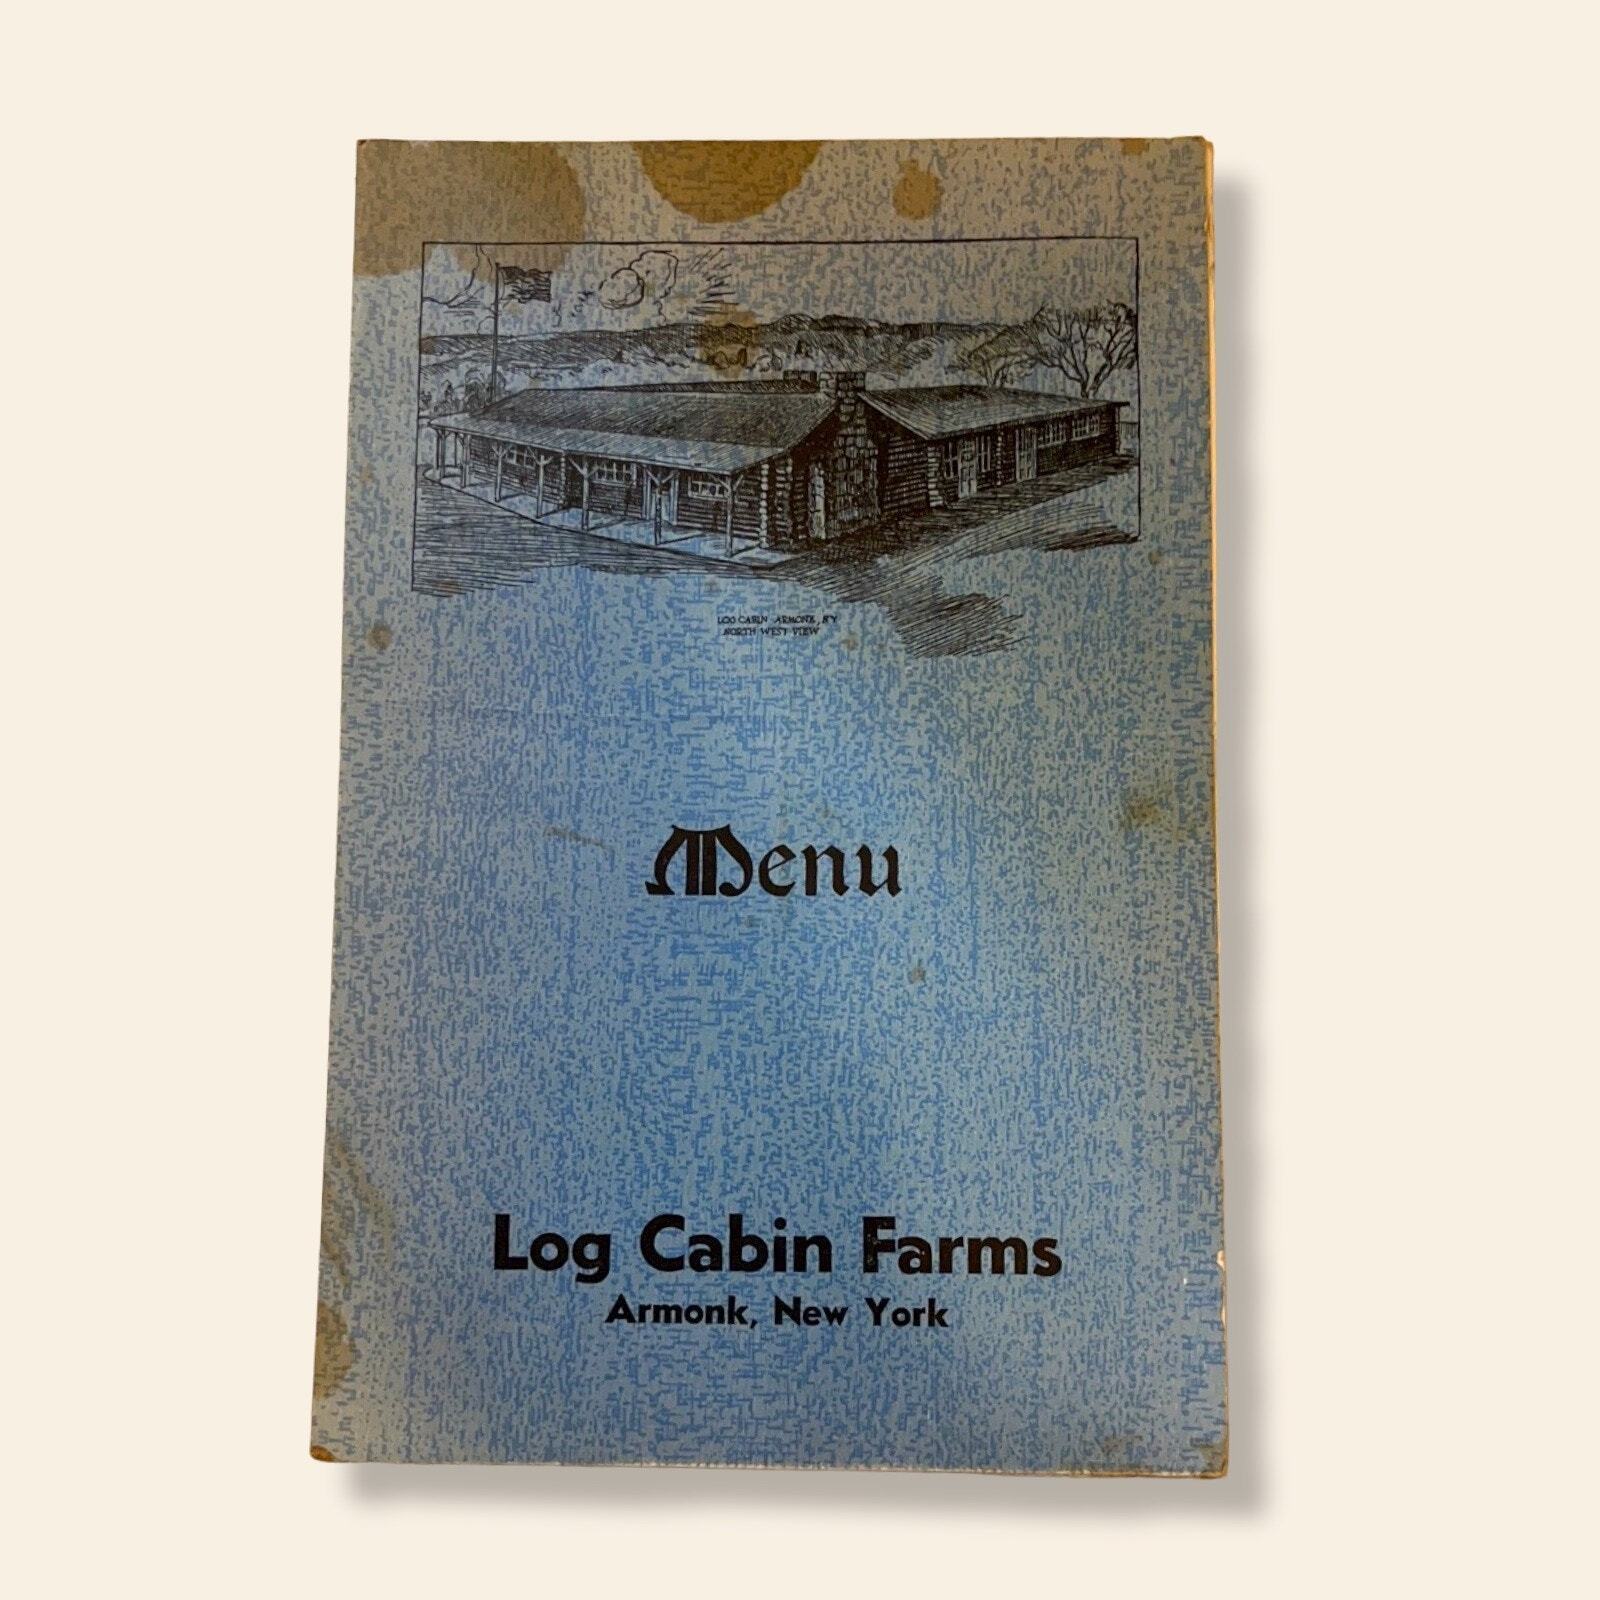 Vintage Log Cabin Farms -Armonk, New York Menu 1940s